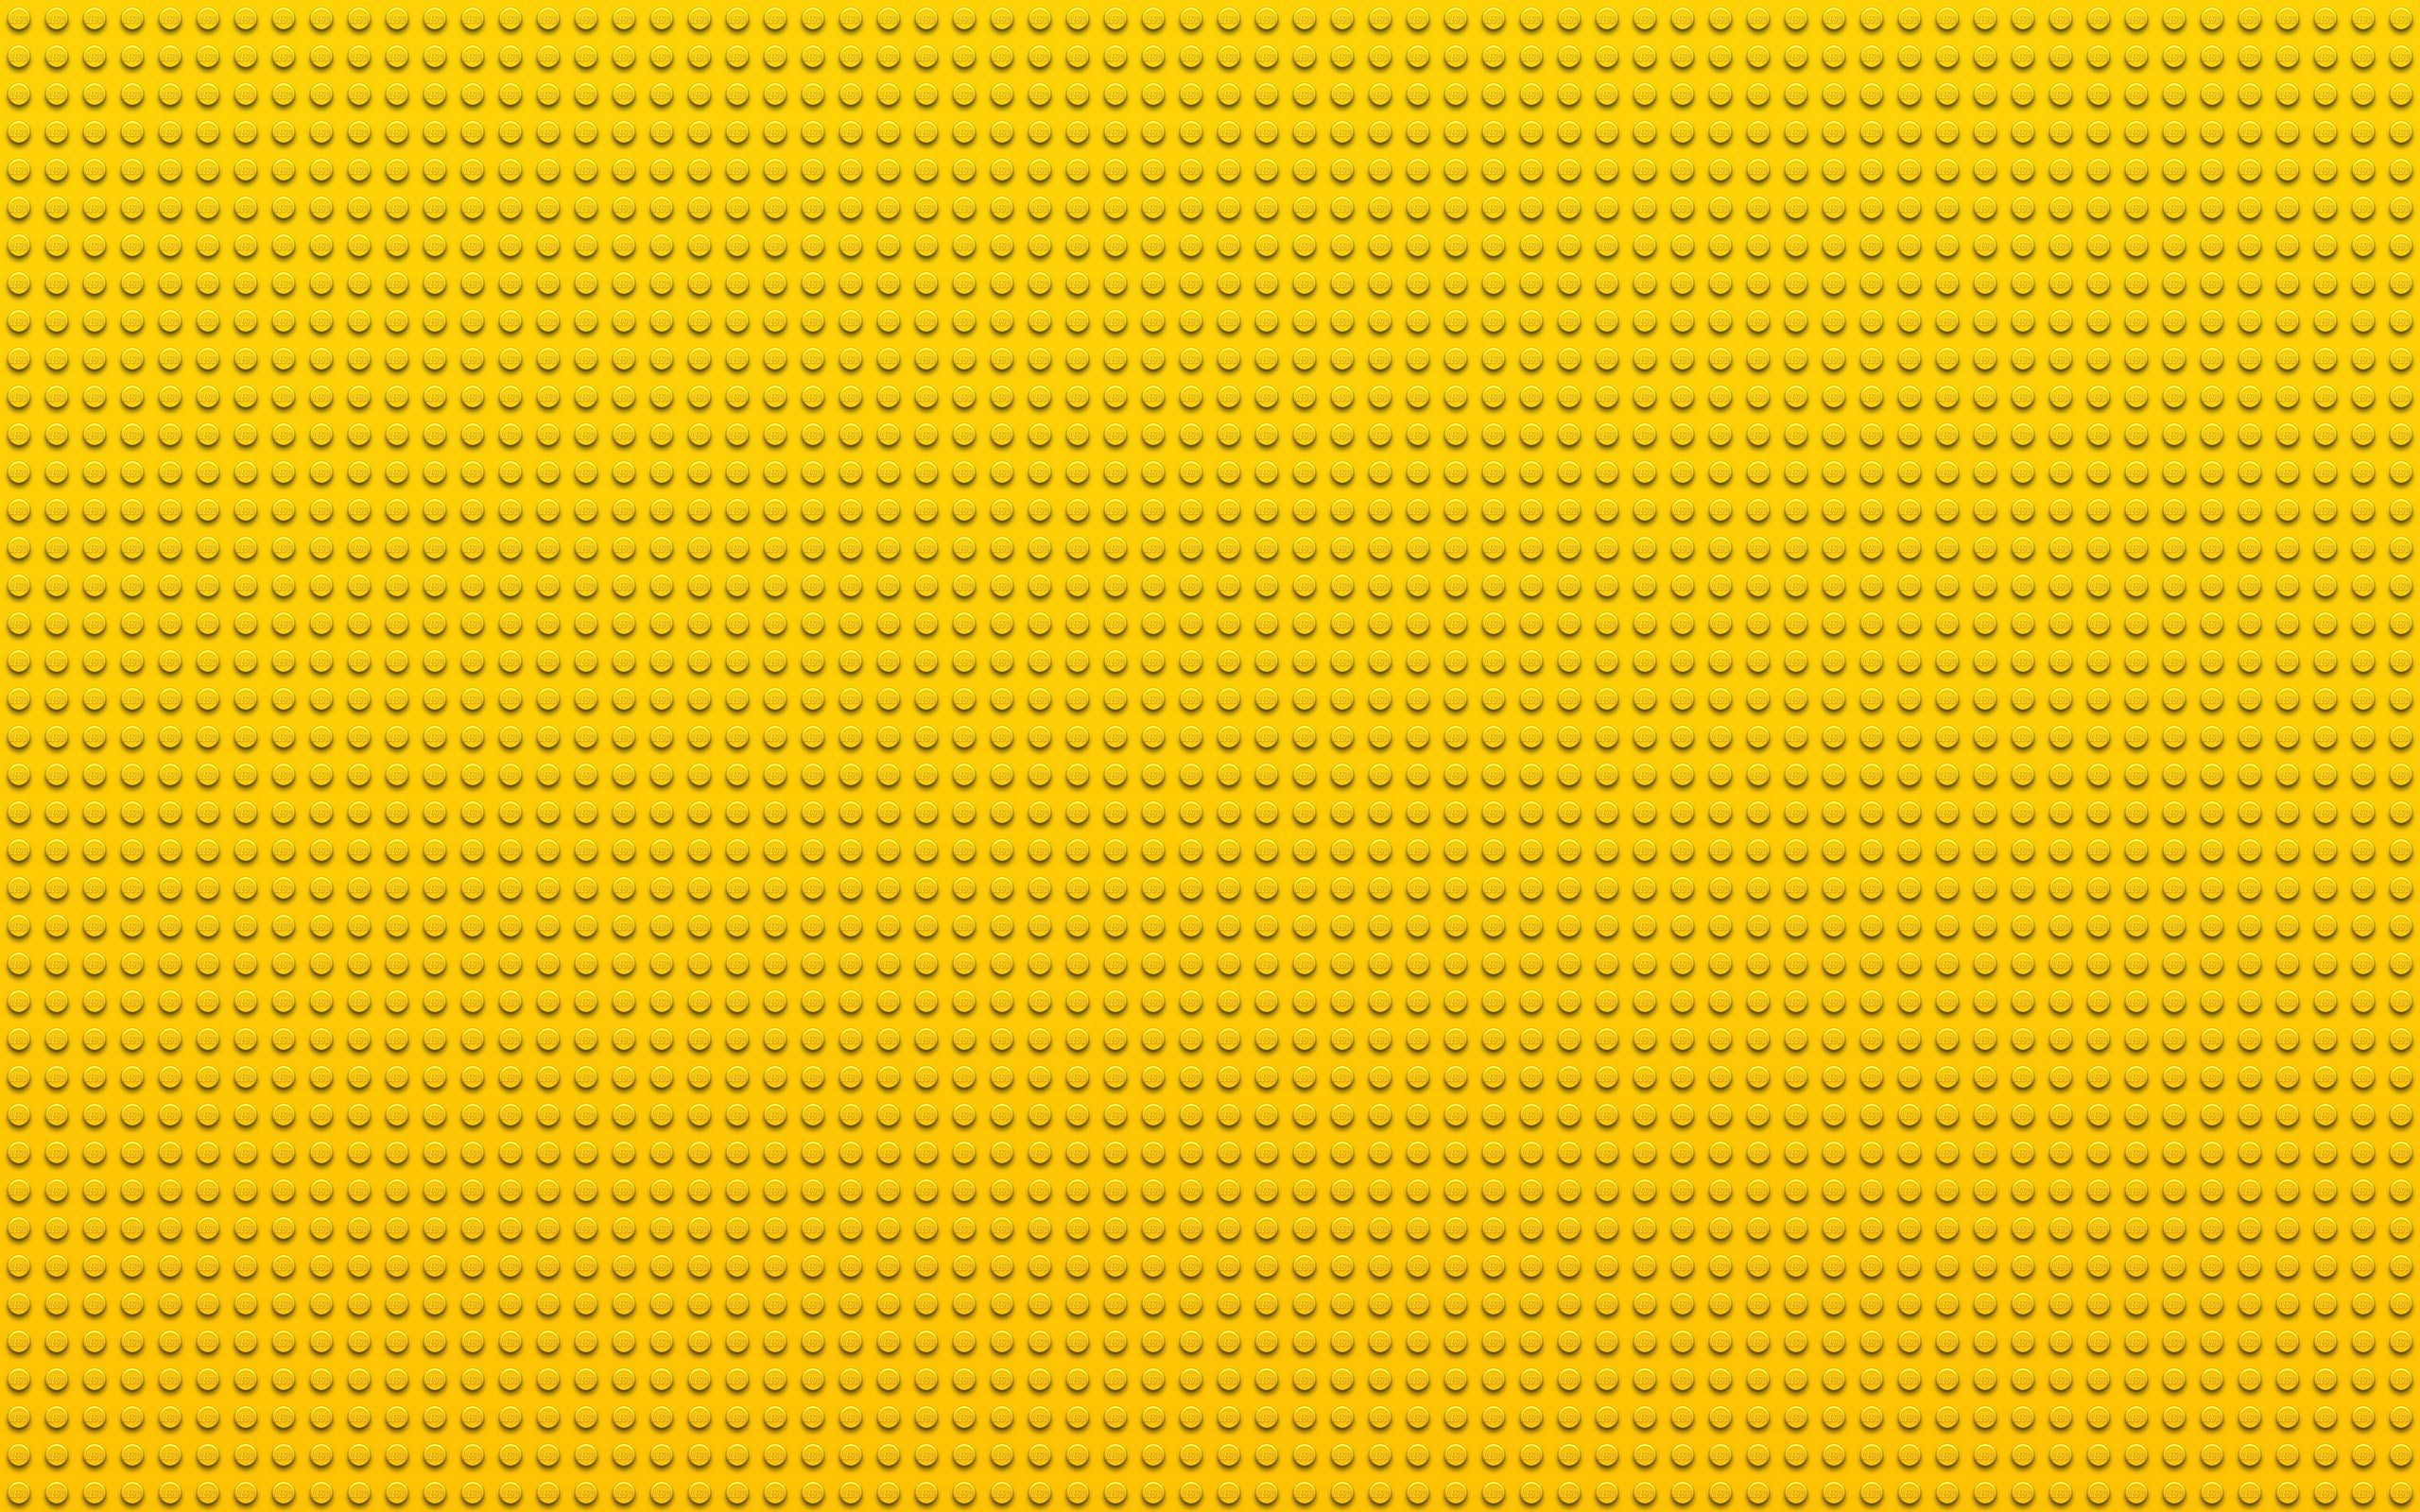 dots, Lego, textures, yellow